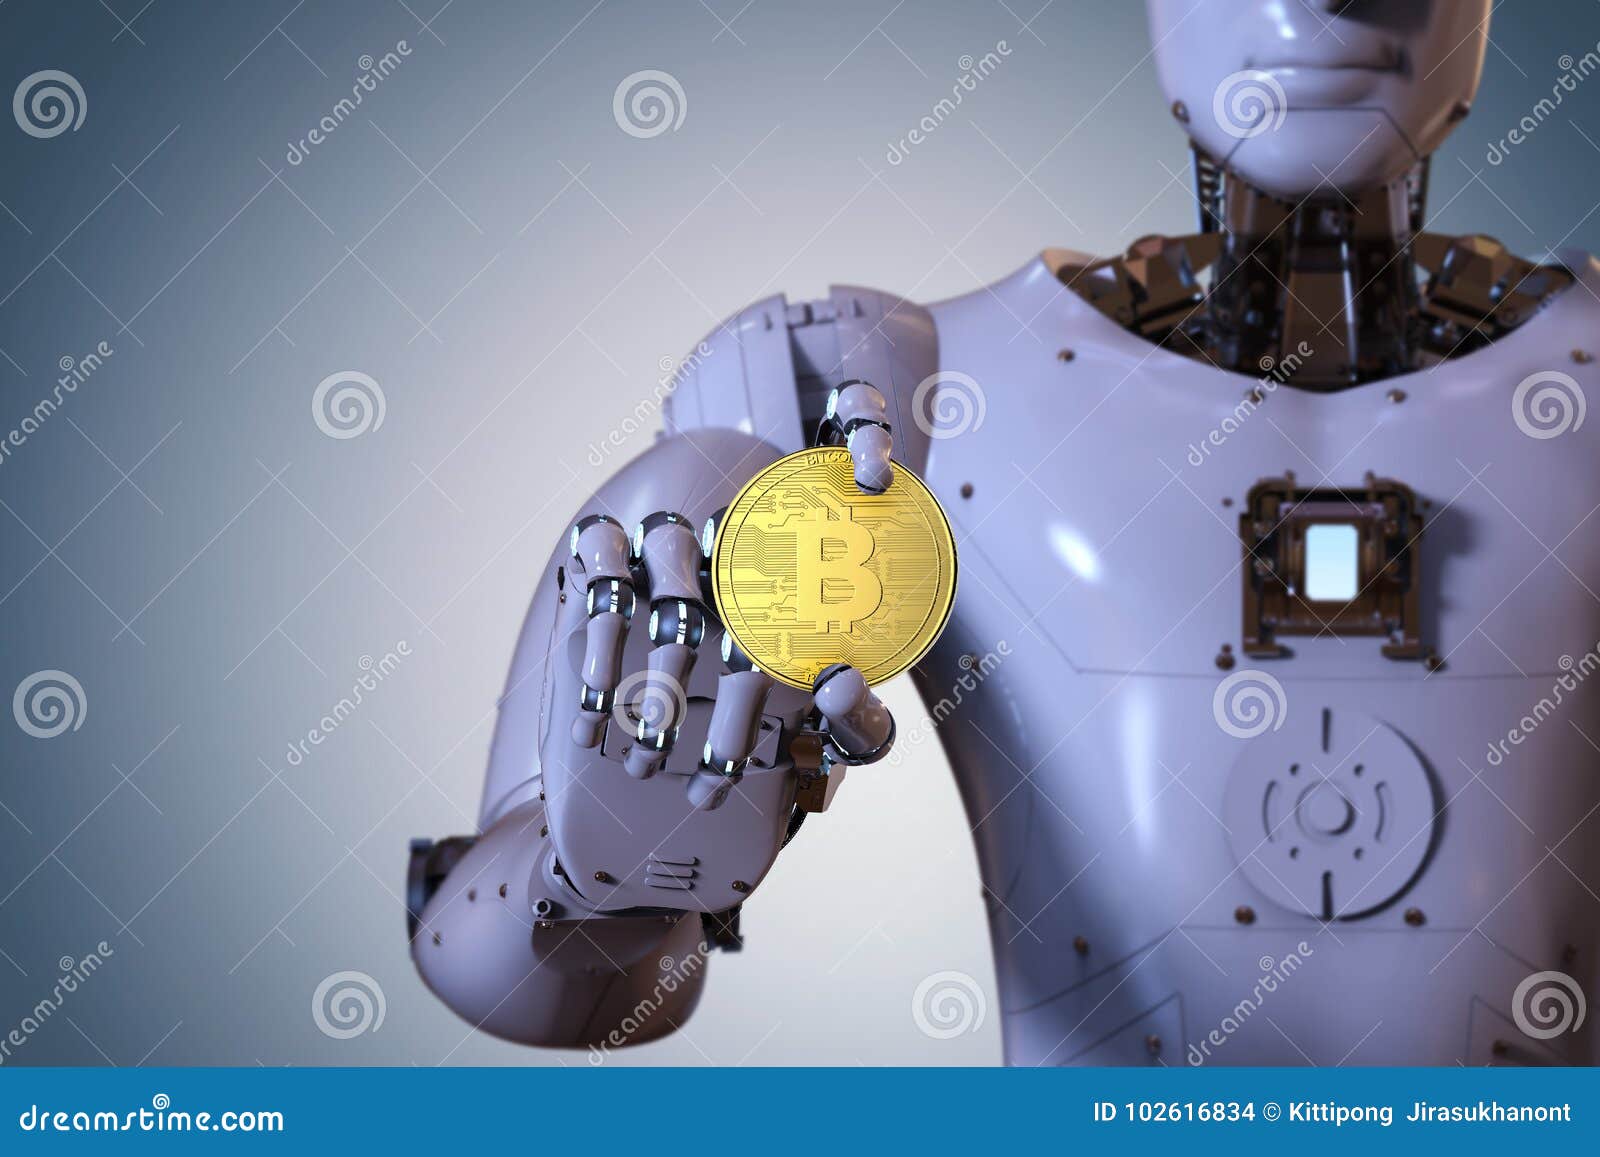 cel mai bun broker bitcoin de utilizat bitcoin robot